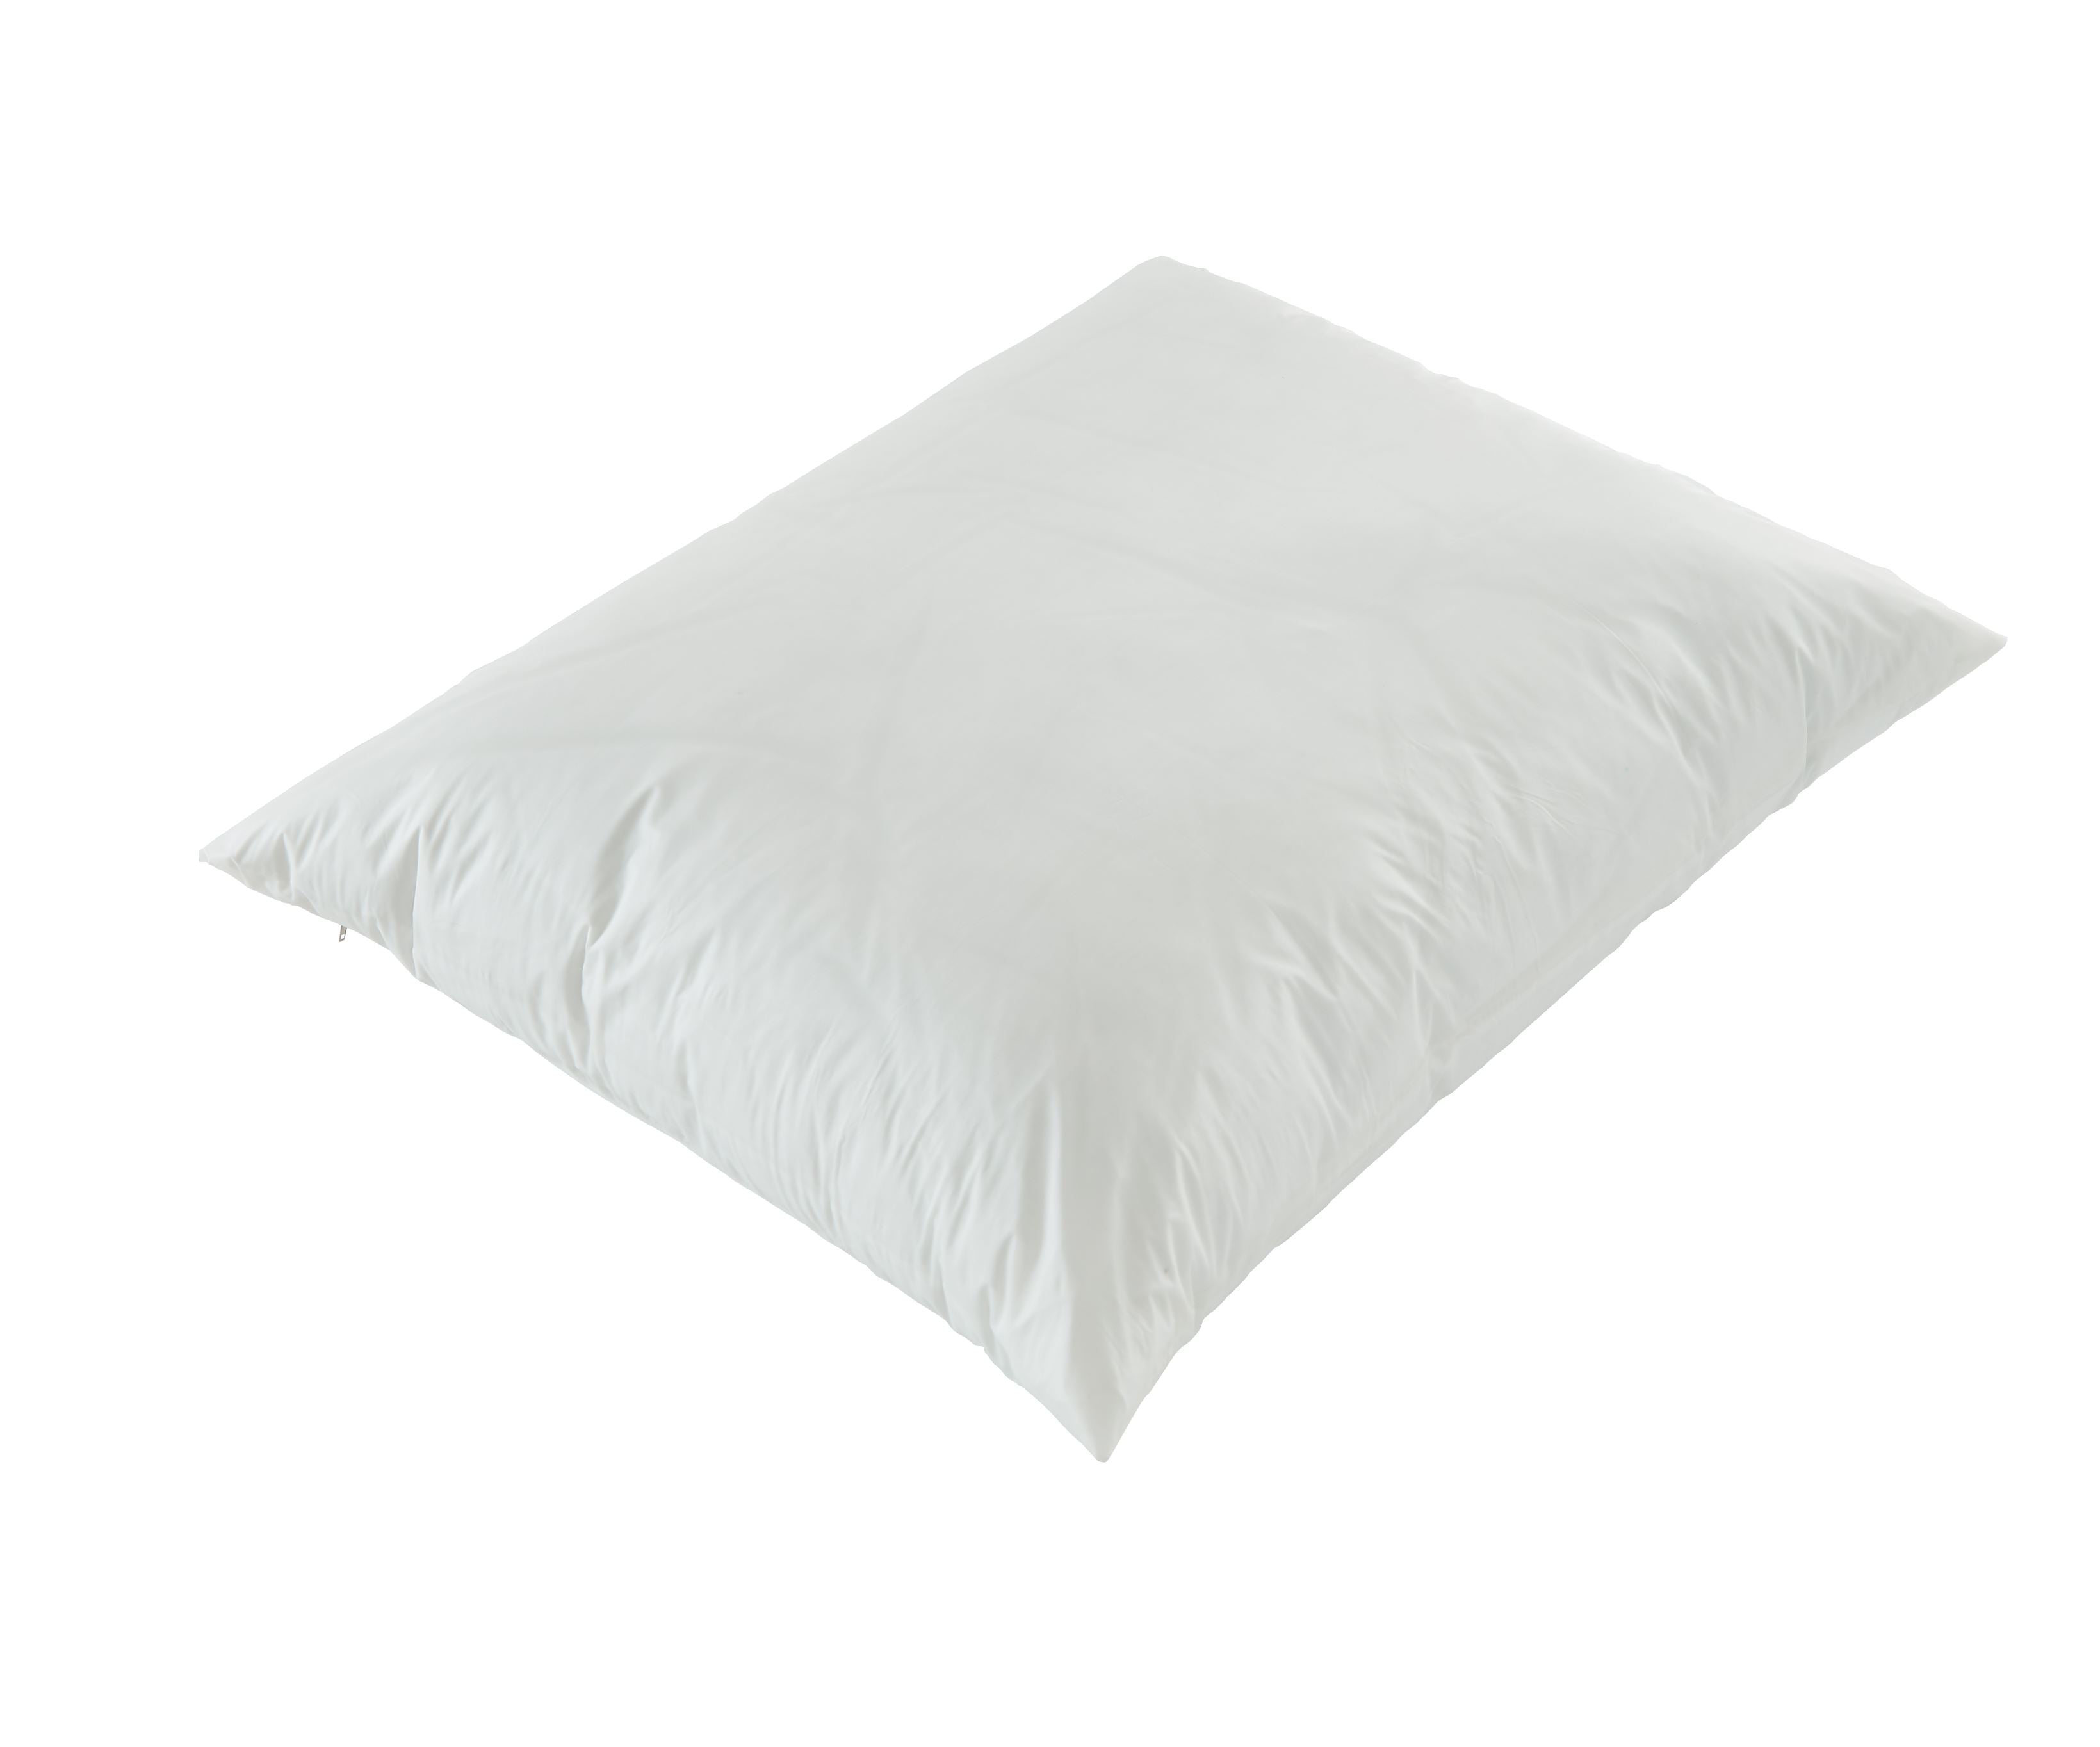 3 Gauge Zippered Vinyl Pillow Encasement - 2 PACK Pillow Protector Bargoose Home Textiles, Inc. 